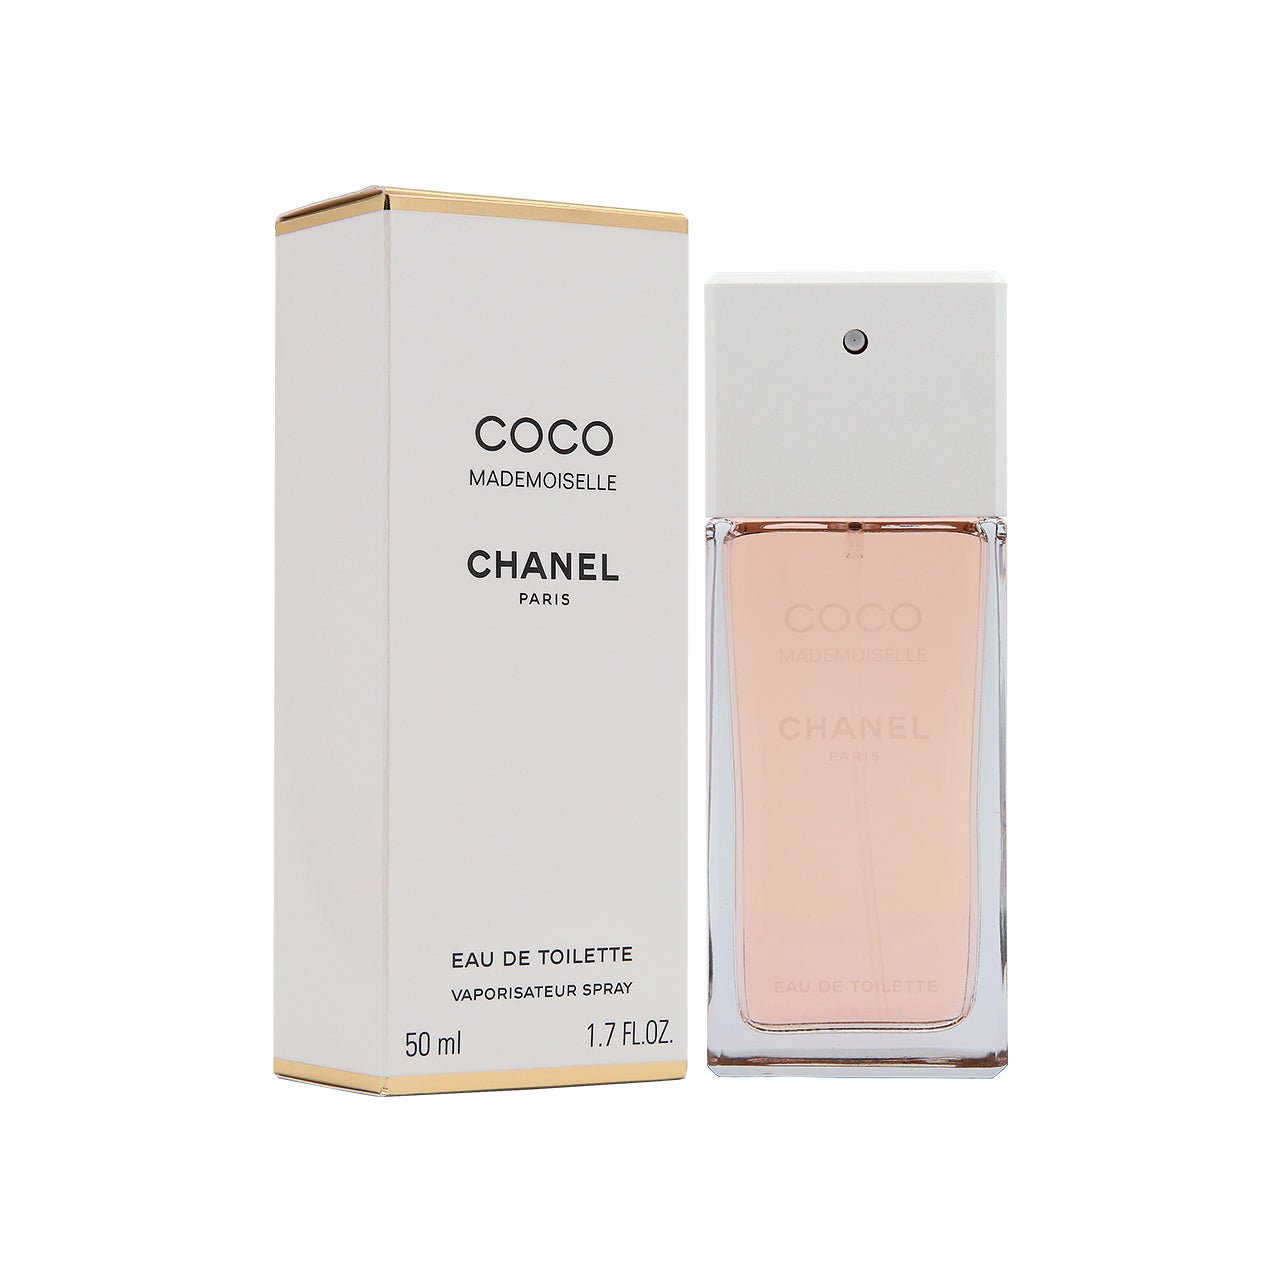 Chanel COCO MADEMOISELLE Eau de Toilette Spray 50ml